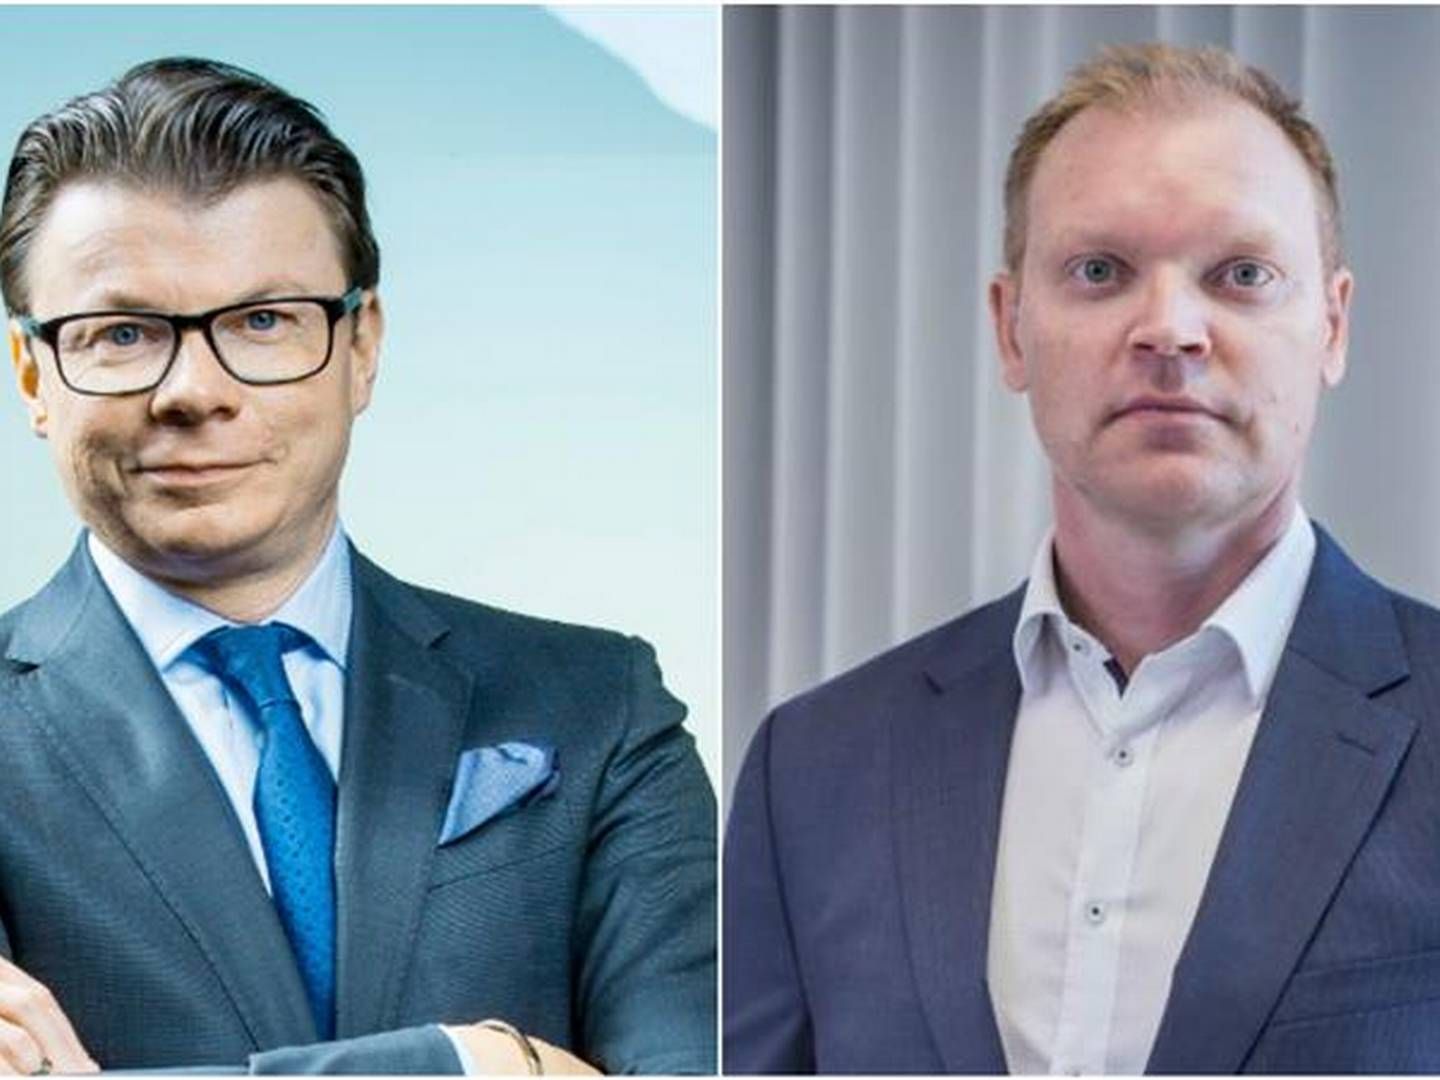 Mandatum Group CEO Petri Niemisvirta (right) & OP Asset Management CEO Tuomas Virtala (left).